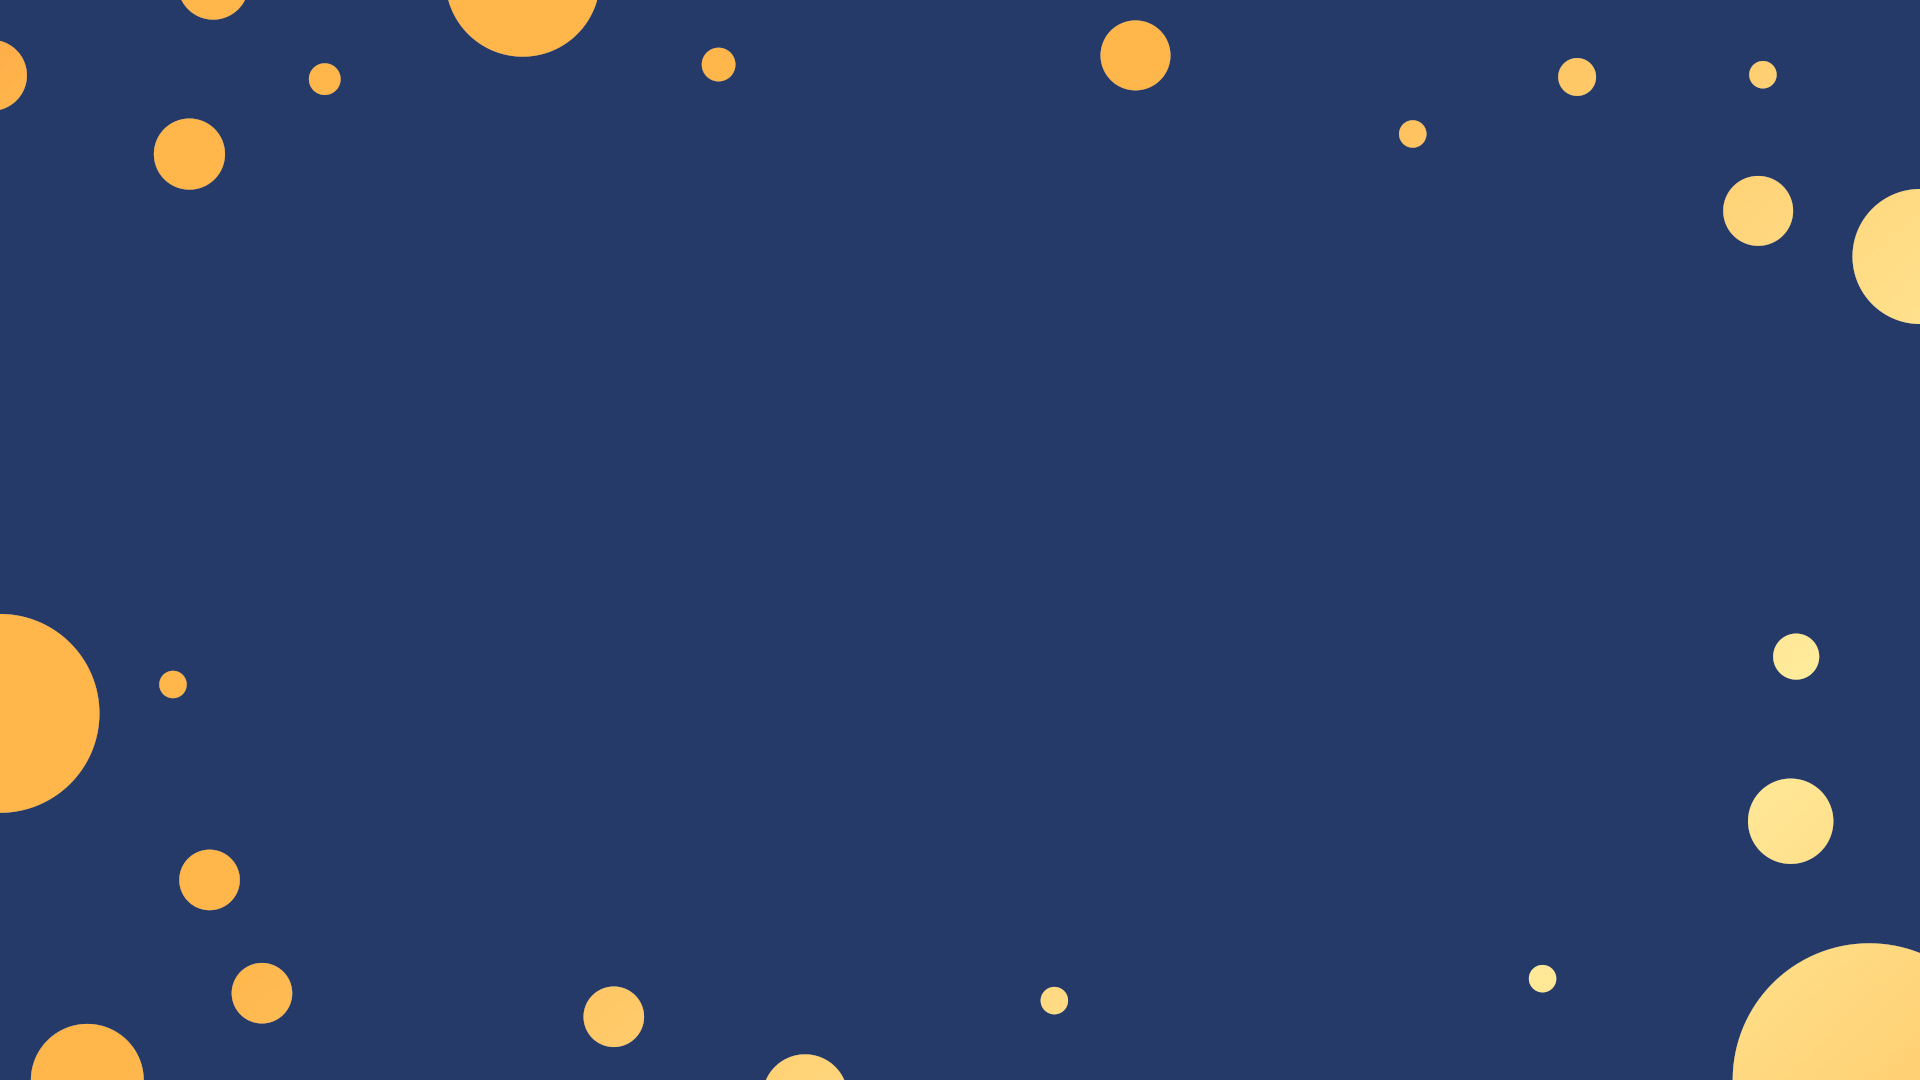 Retro Mockup Powerpoint Templates Abstract Blue Orange